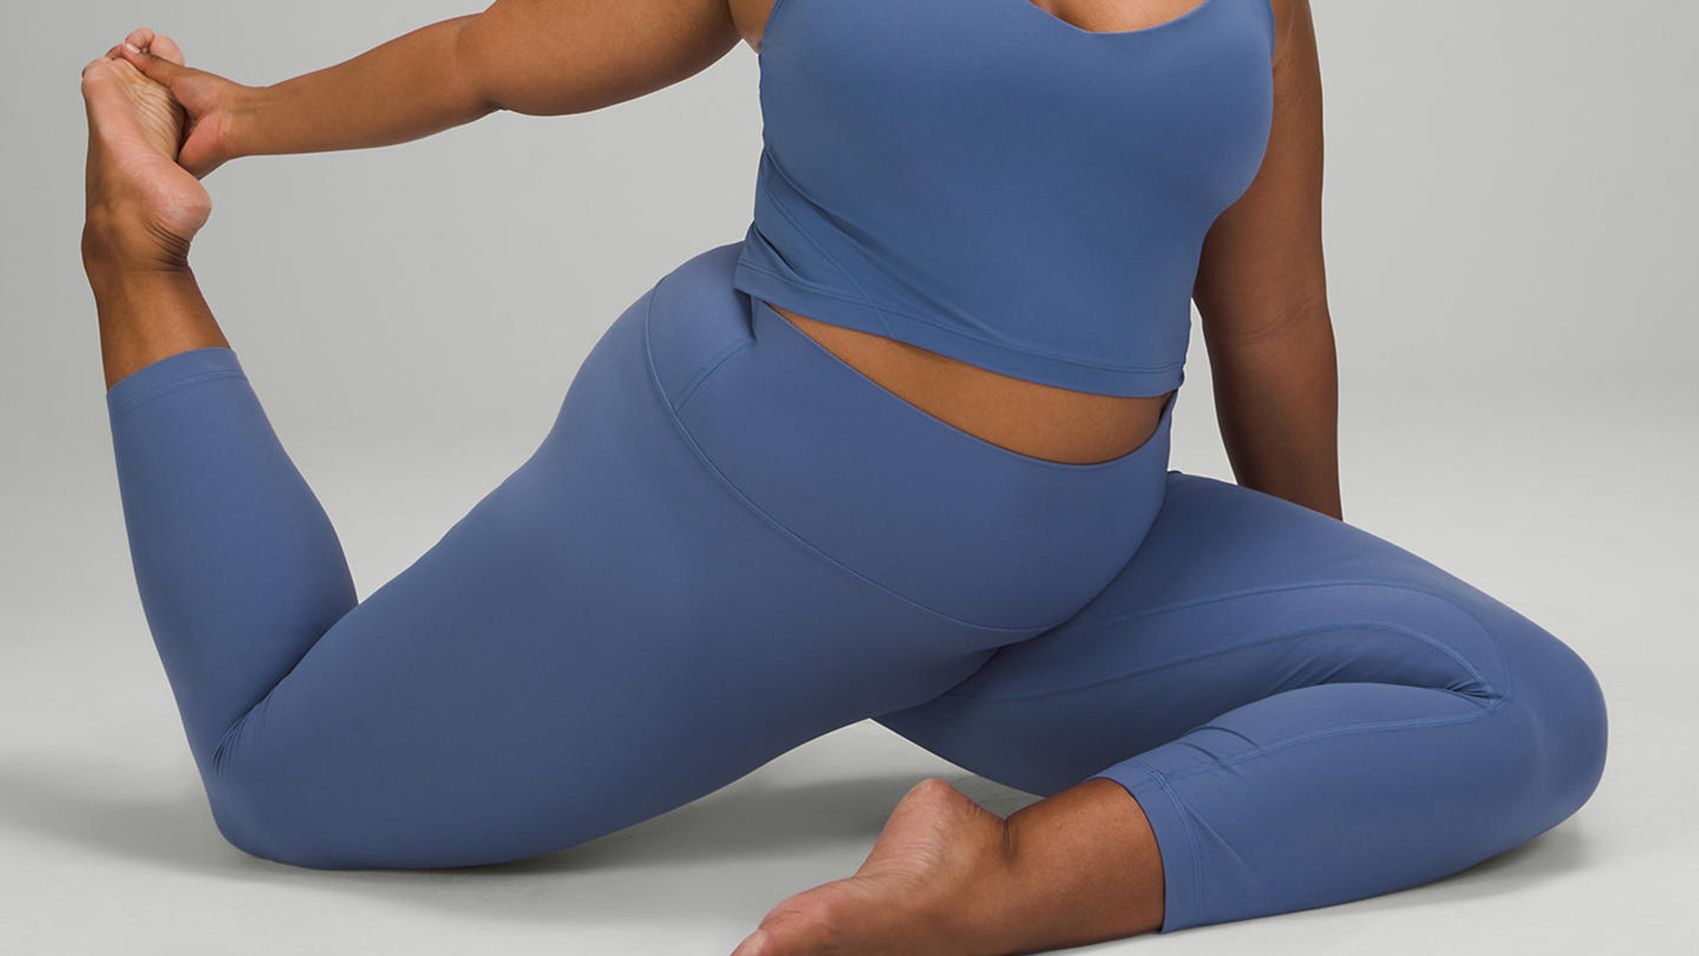 Lululemon Black Friday deals 2021: Yoga mats, Wunder Unders and